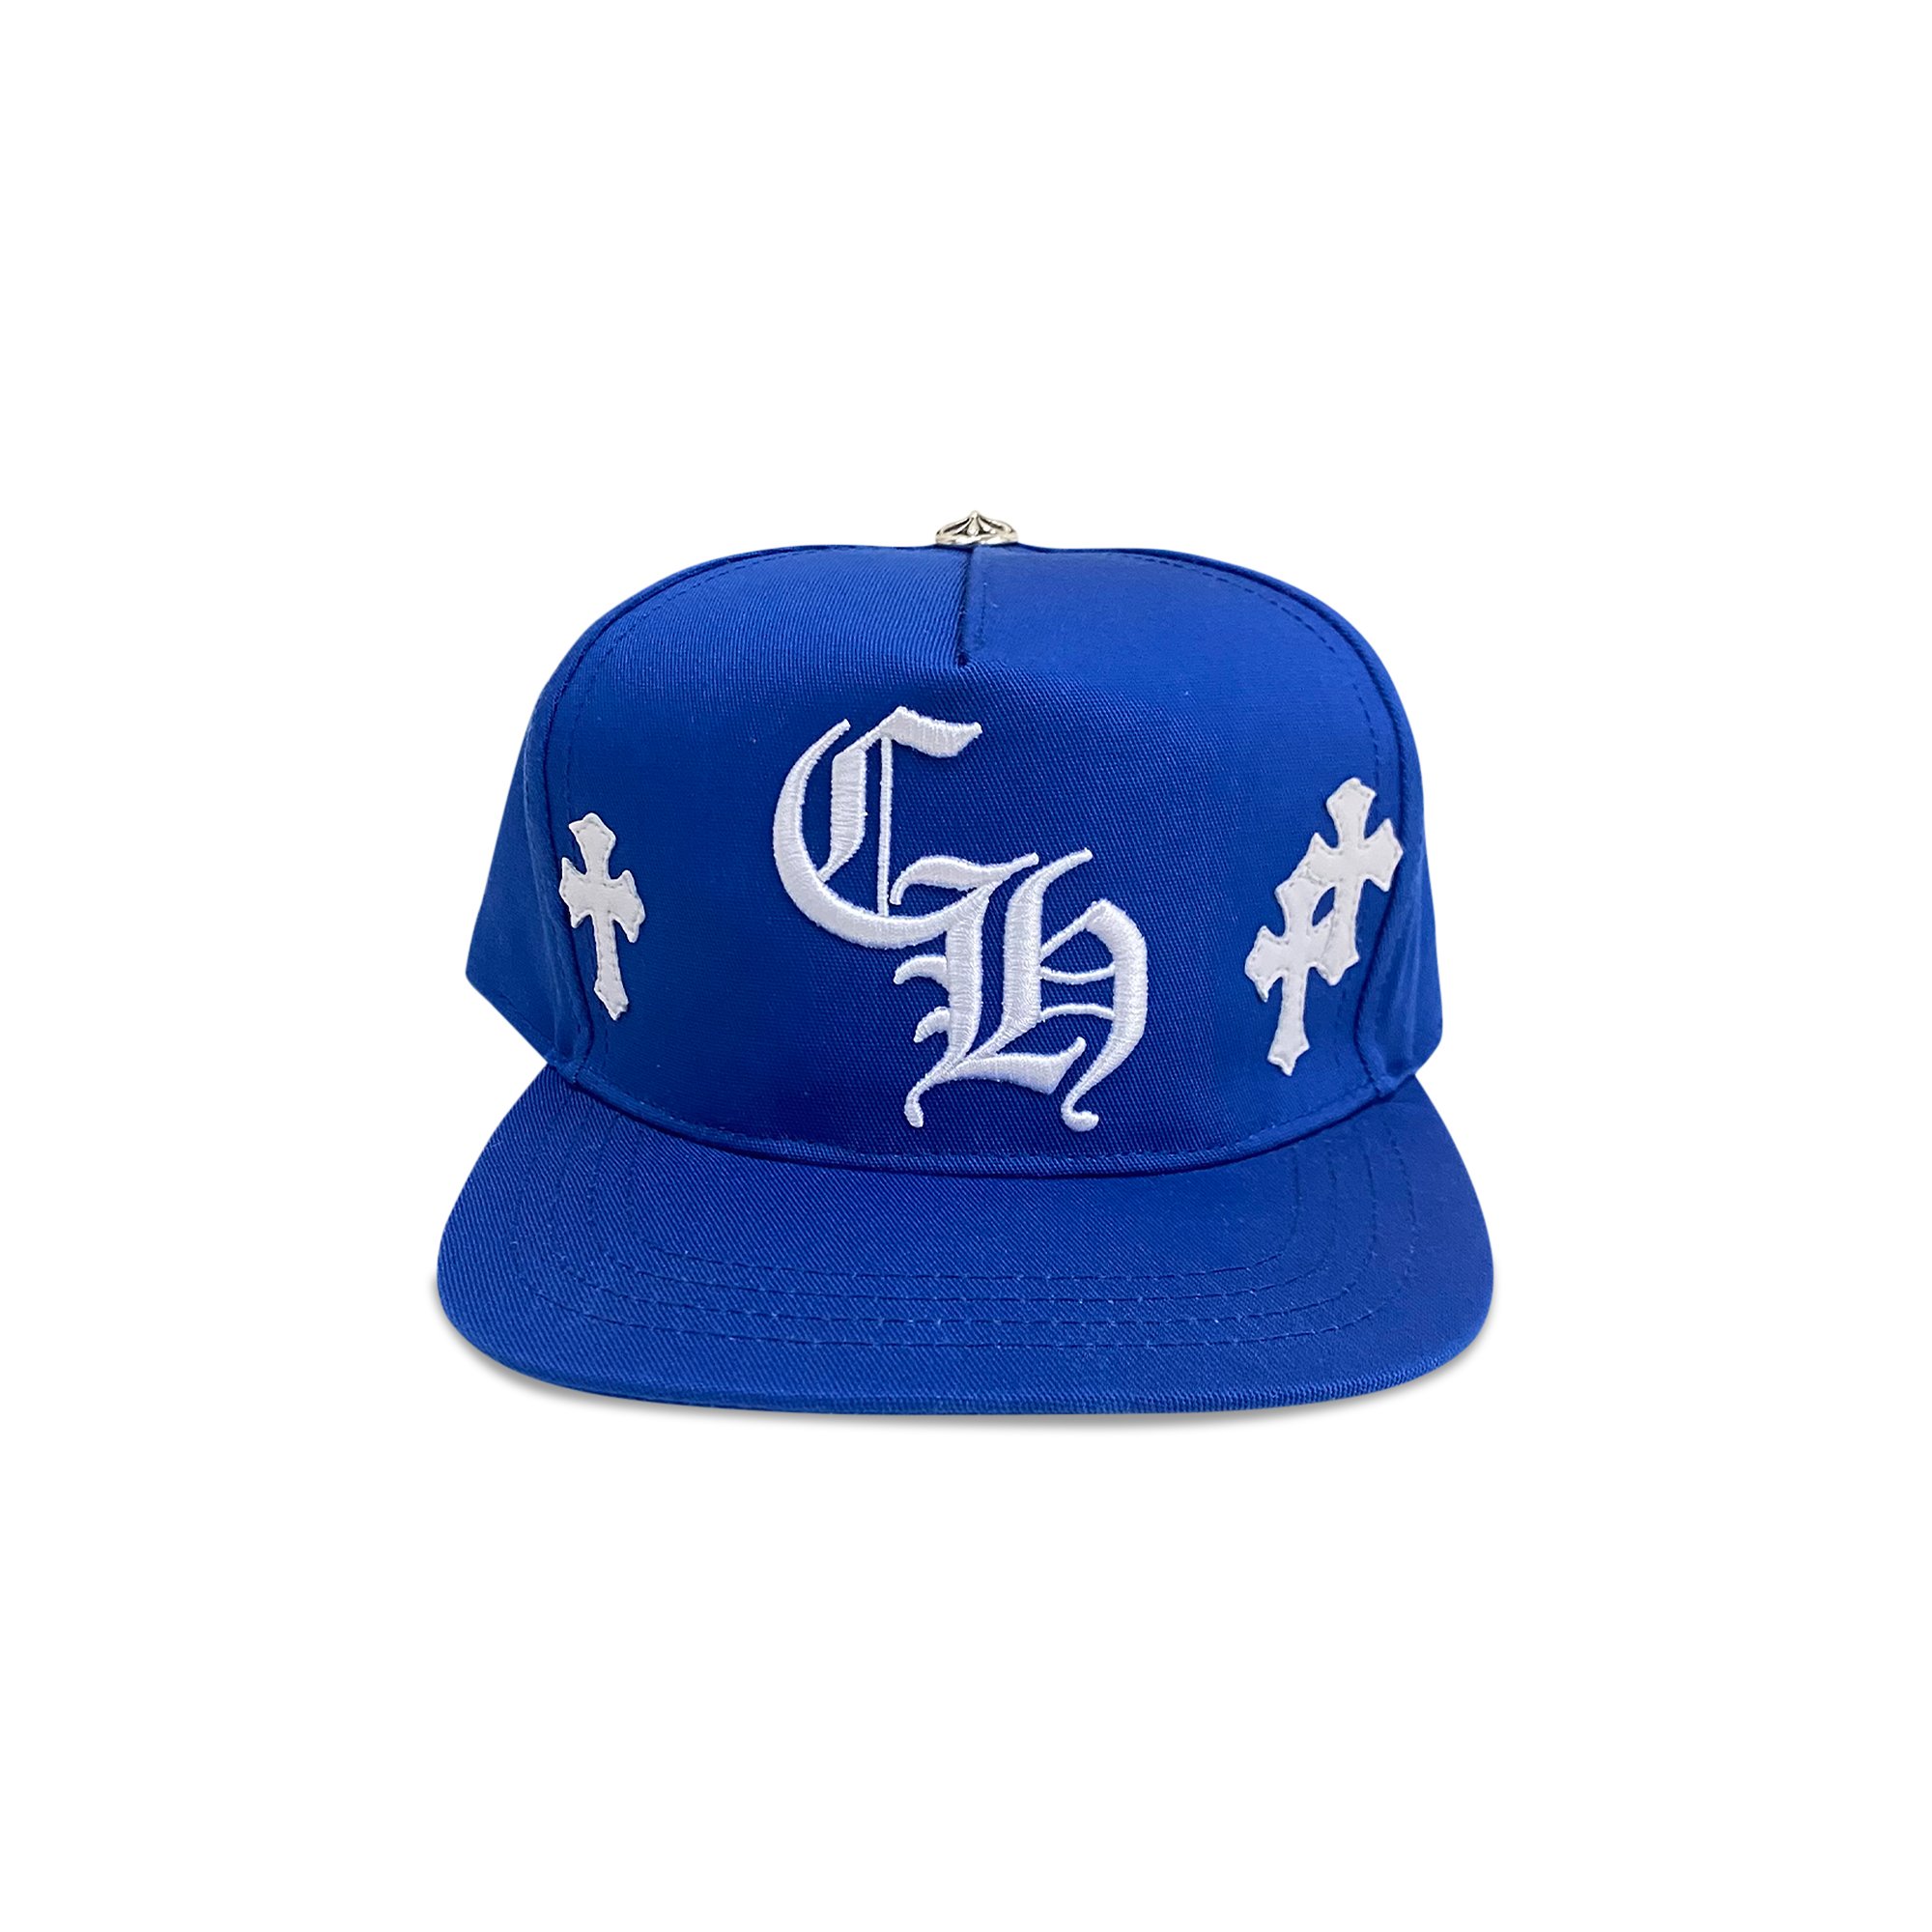 Бейсбольная кепка с нашивкой Chrome Hearts, синяя letter design baseball caps vintage 2017 canada embroidered party hat cotton